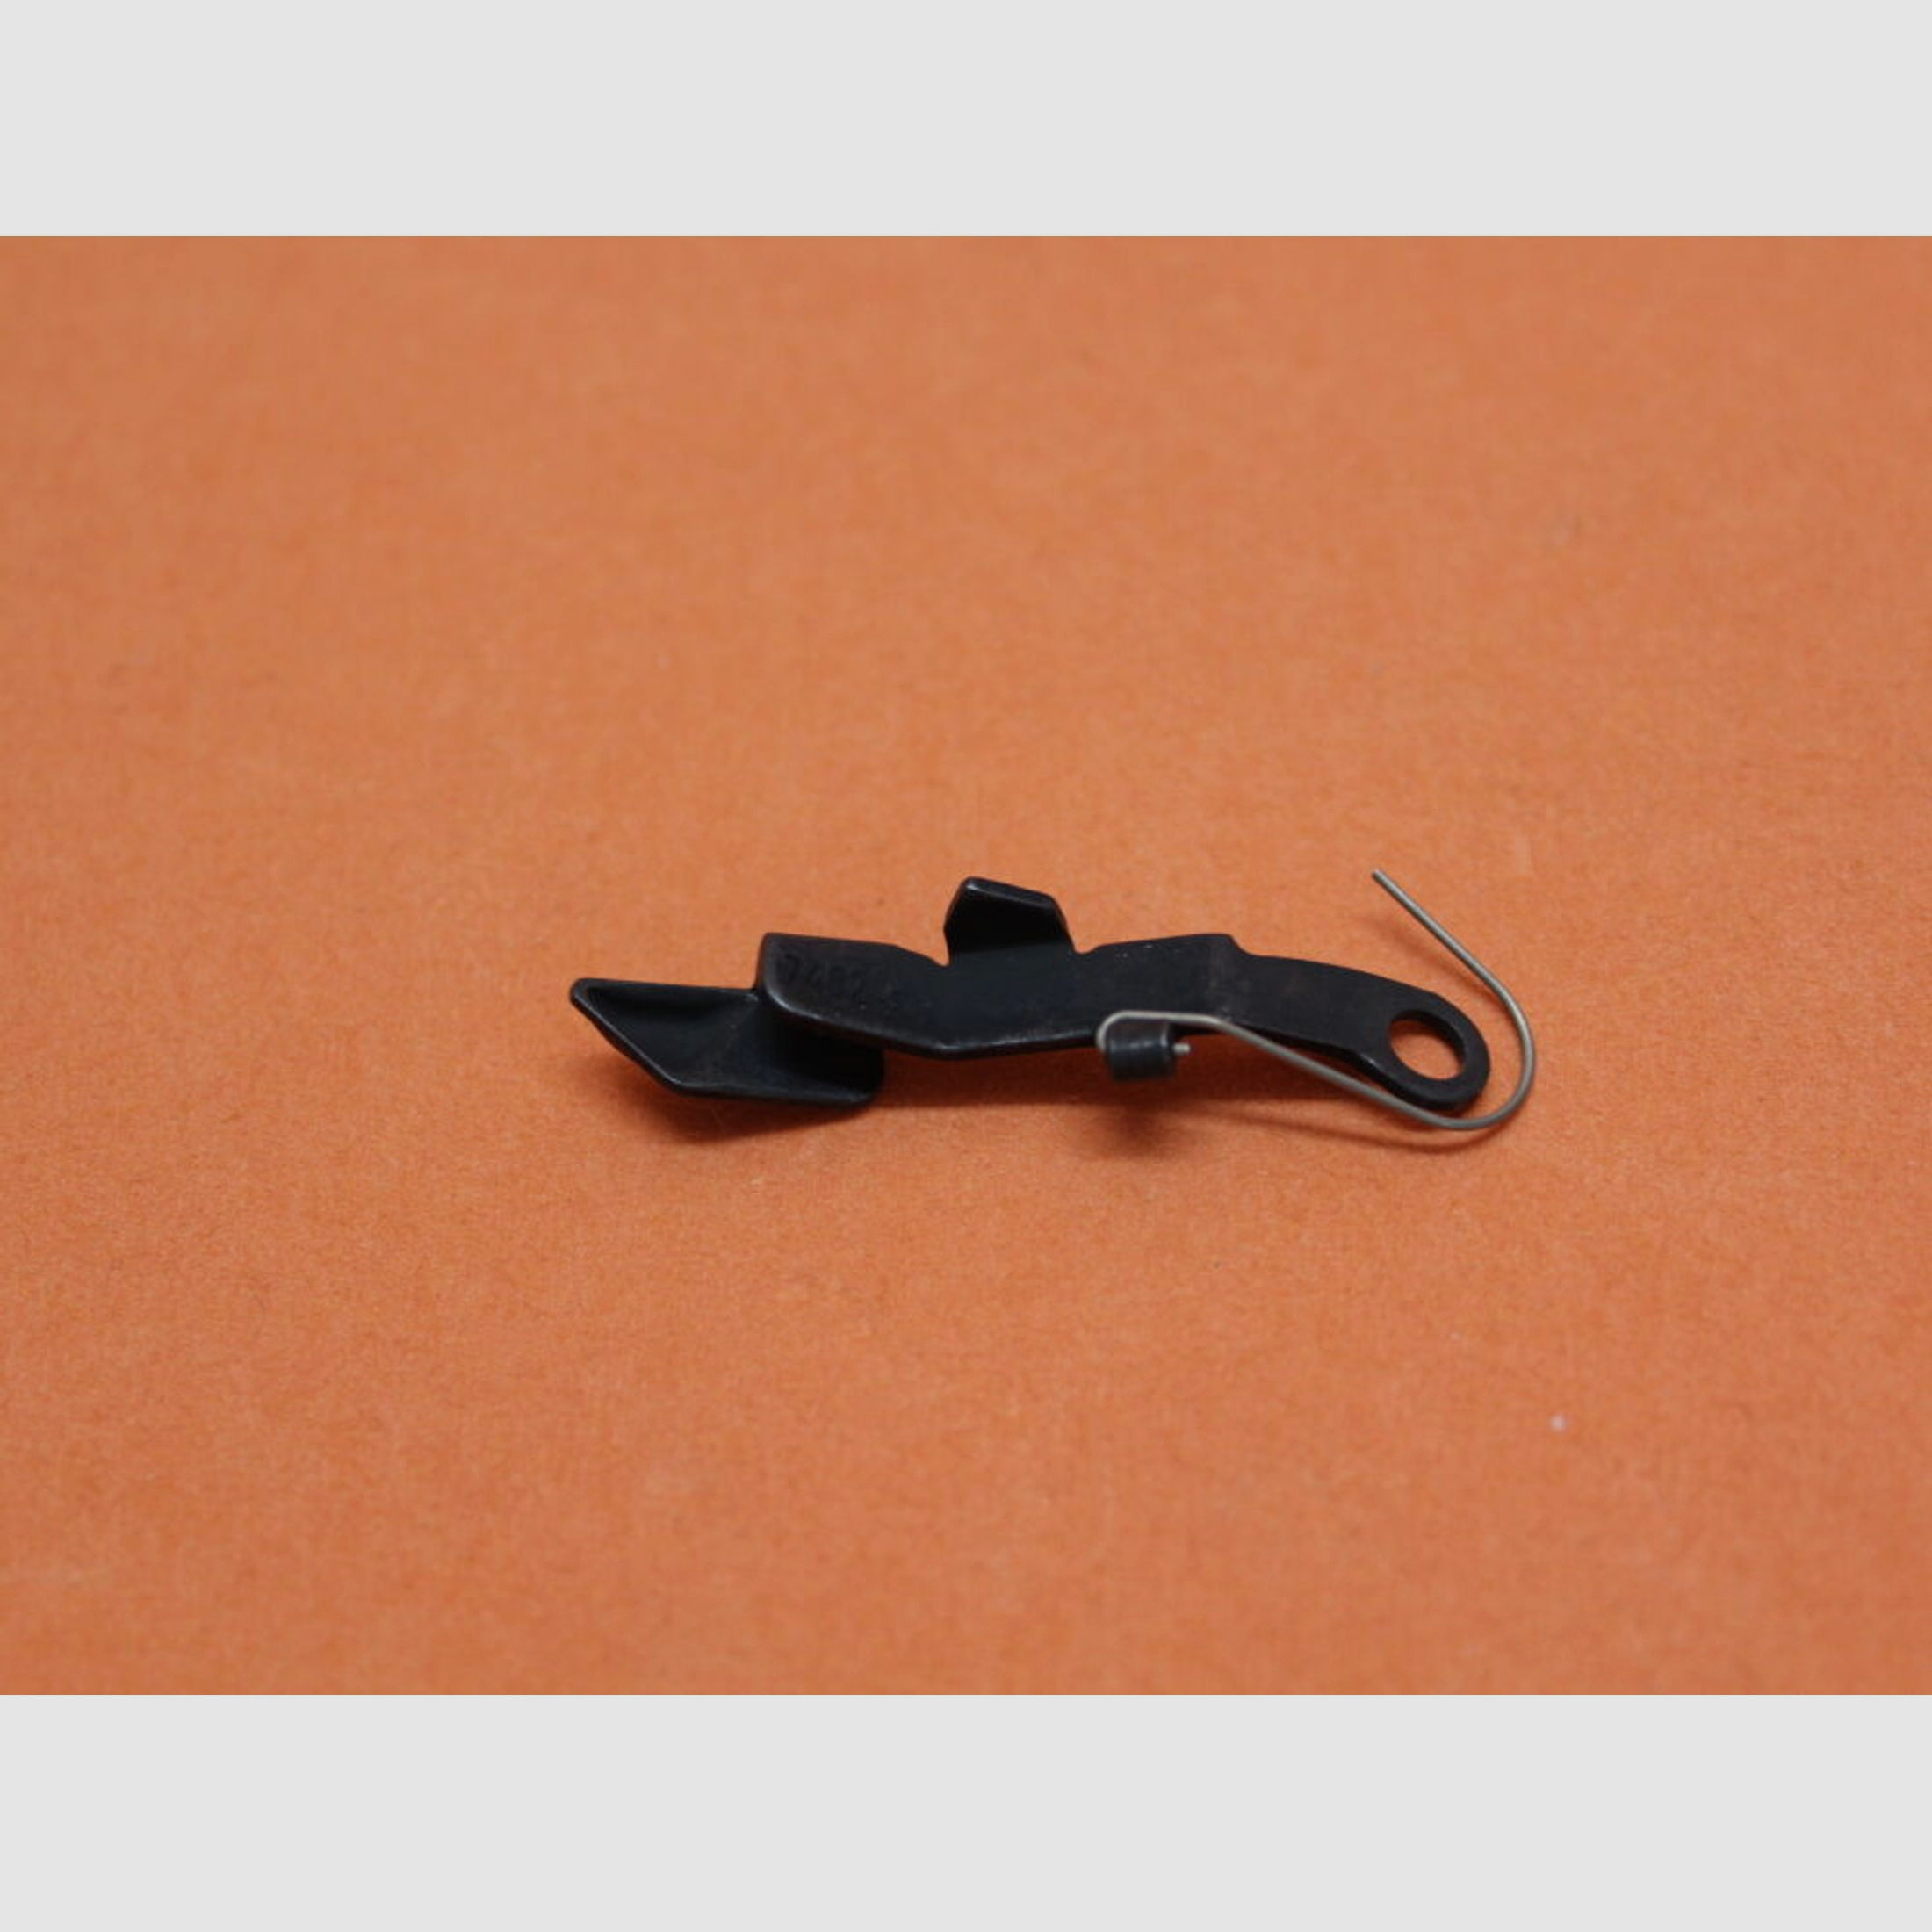 Glock	 Glock (-Gen4): Verschlussfanghebel verlängert Small Frame (ab Modelljahr 2001)